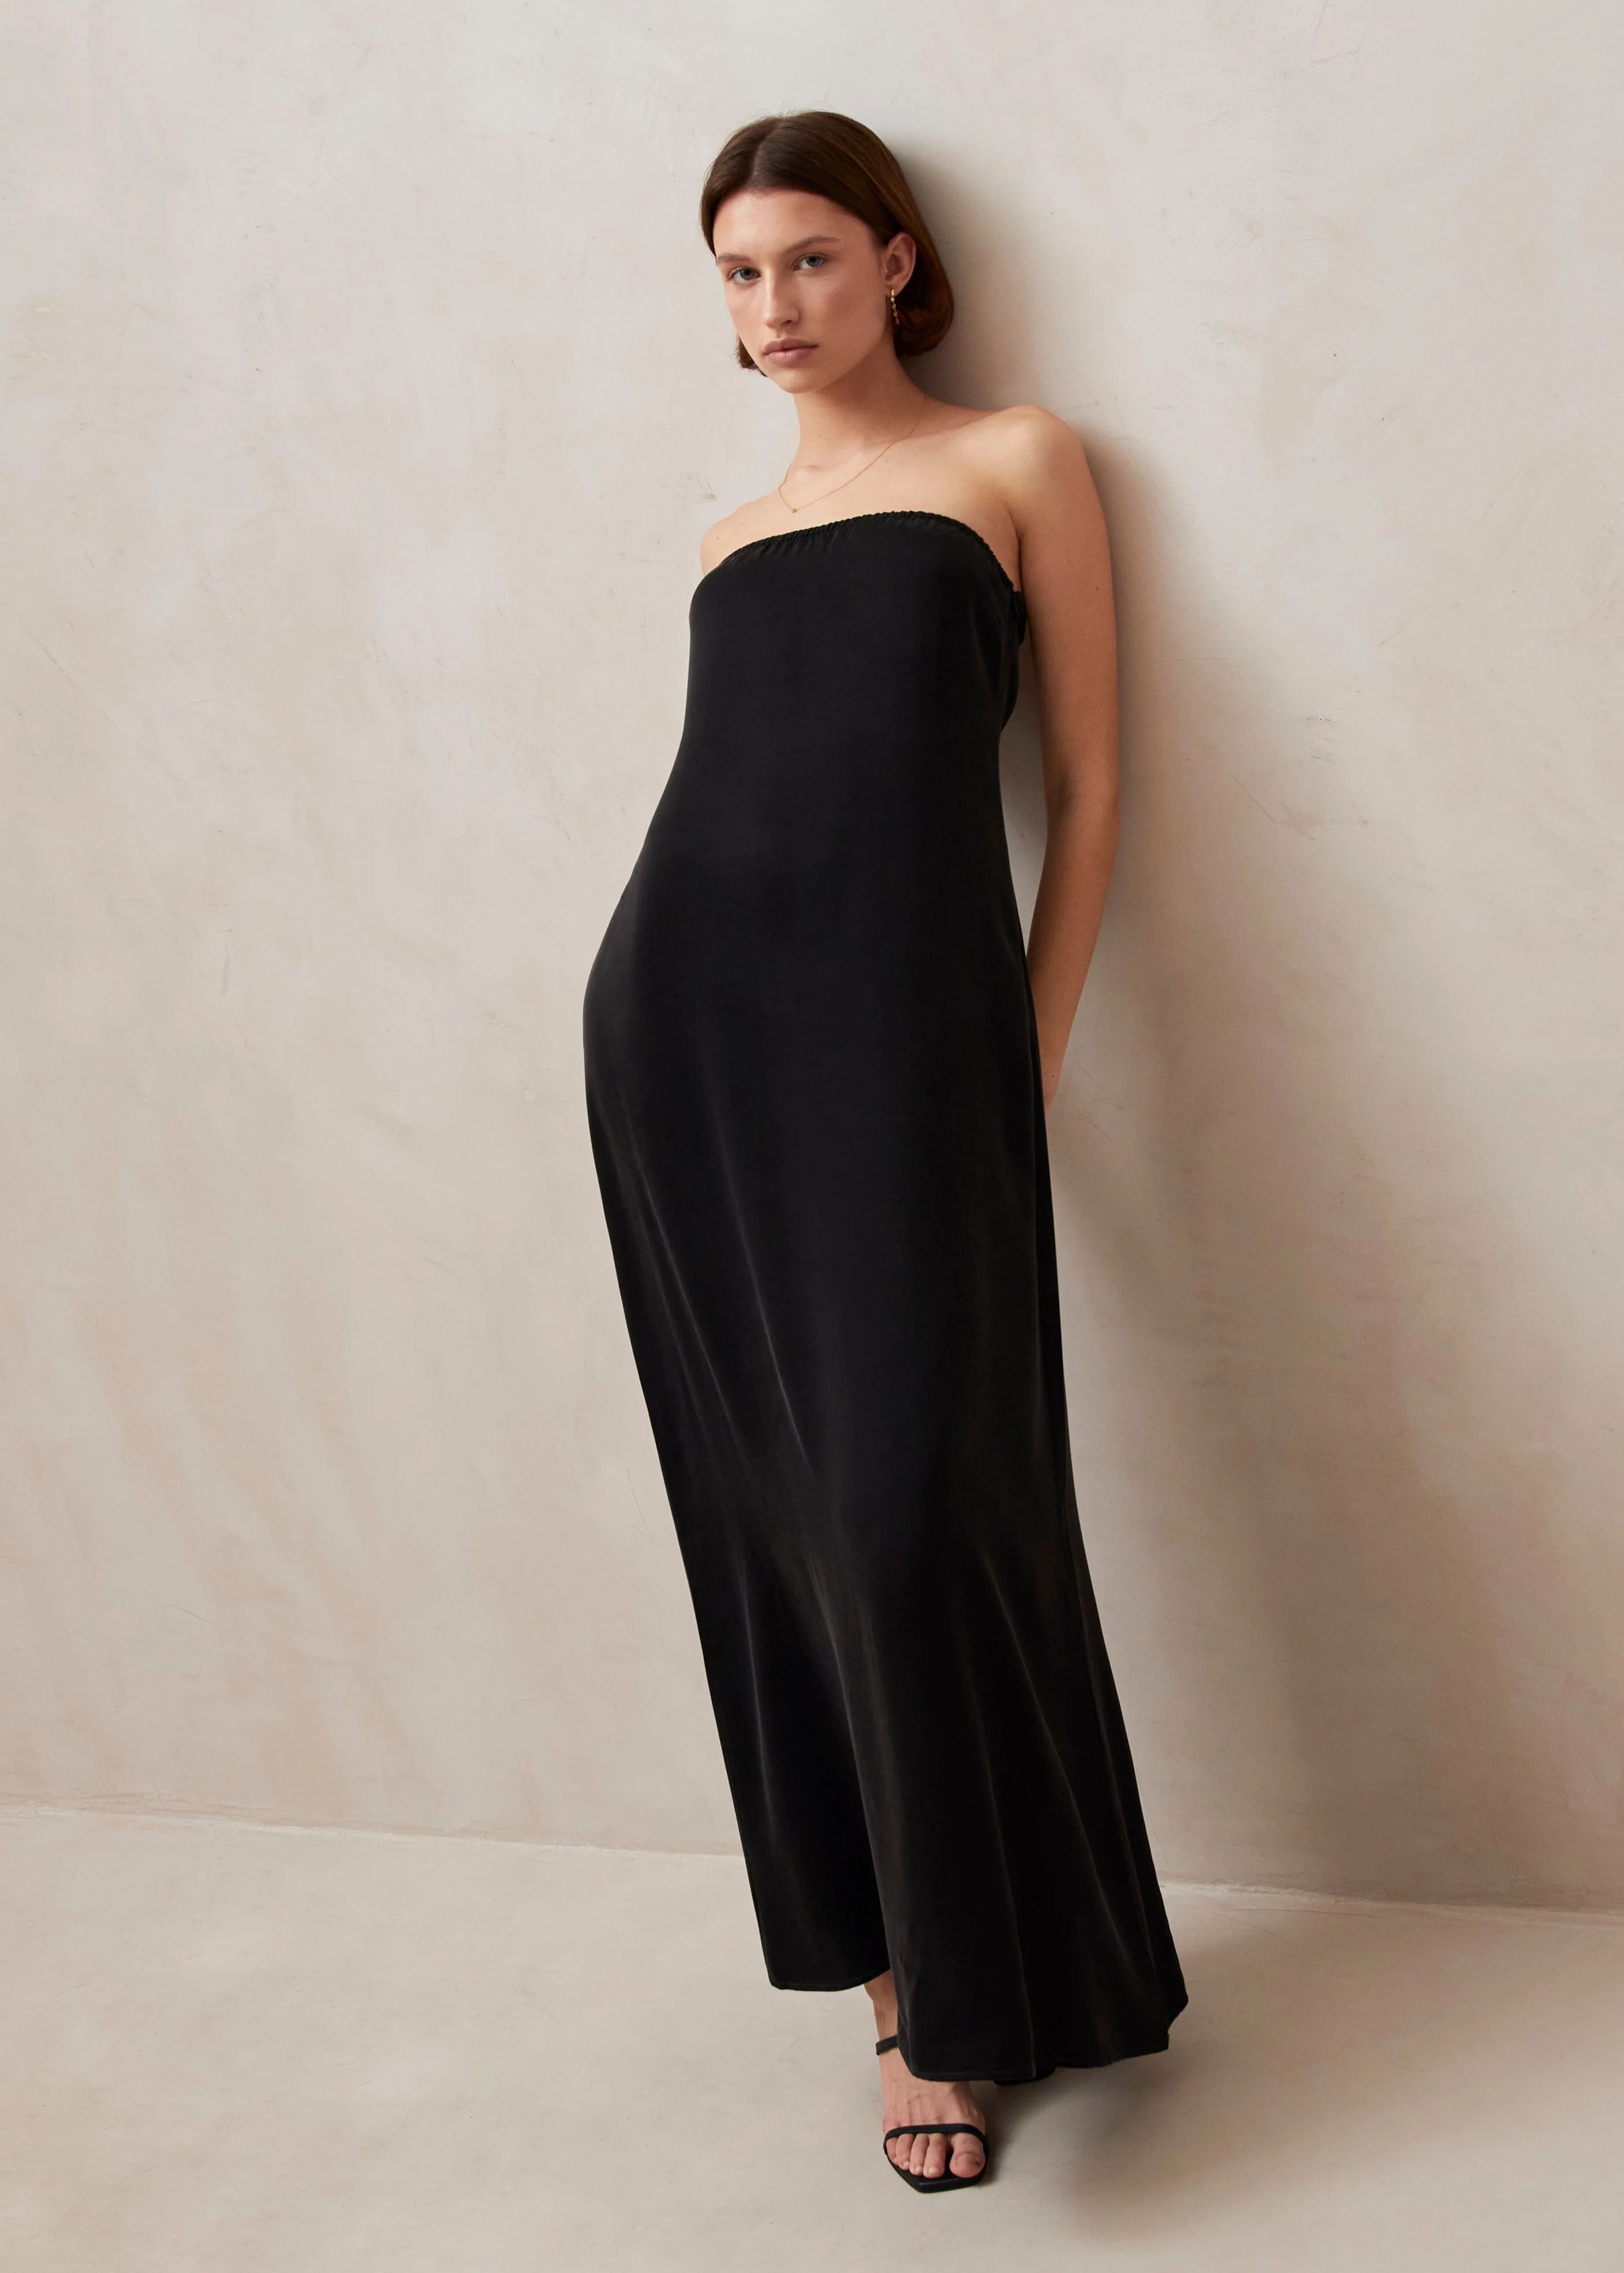 Ilia - Black Maxi Dress | Alohas FR